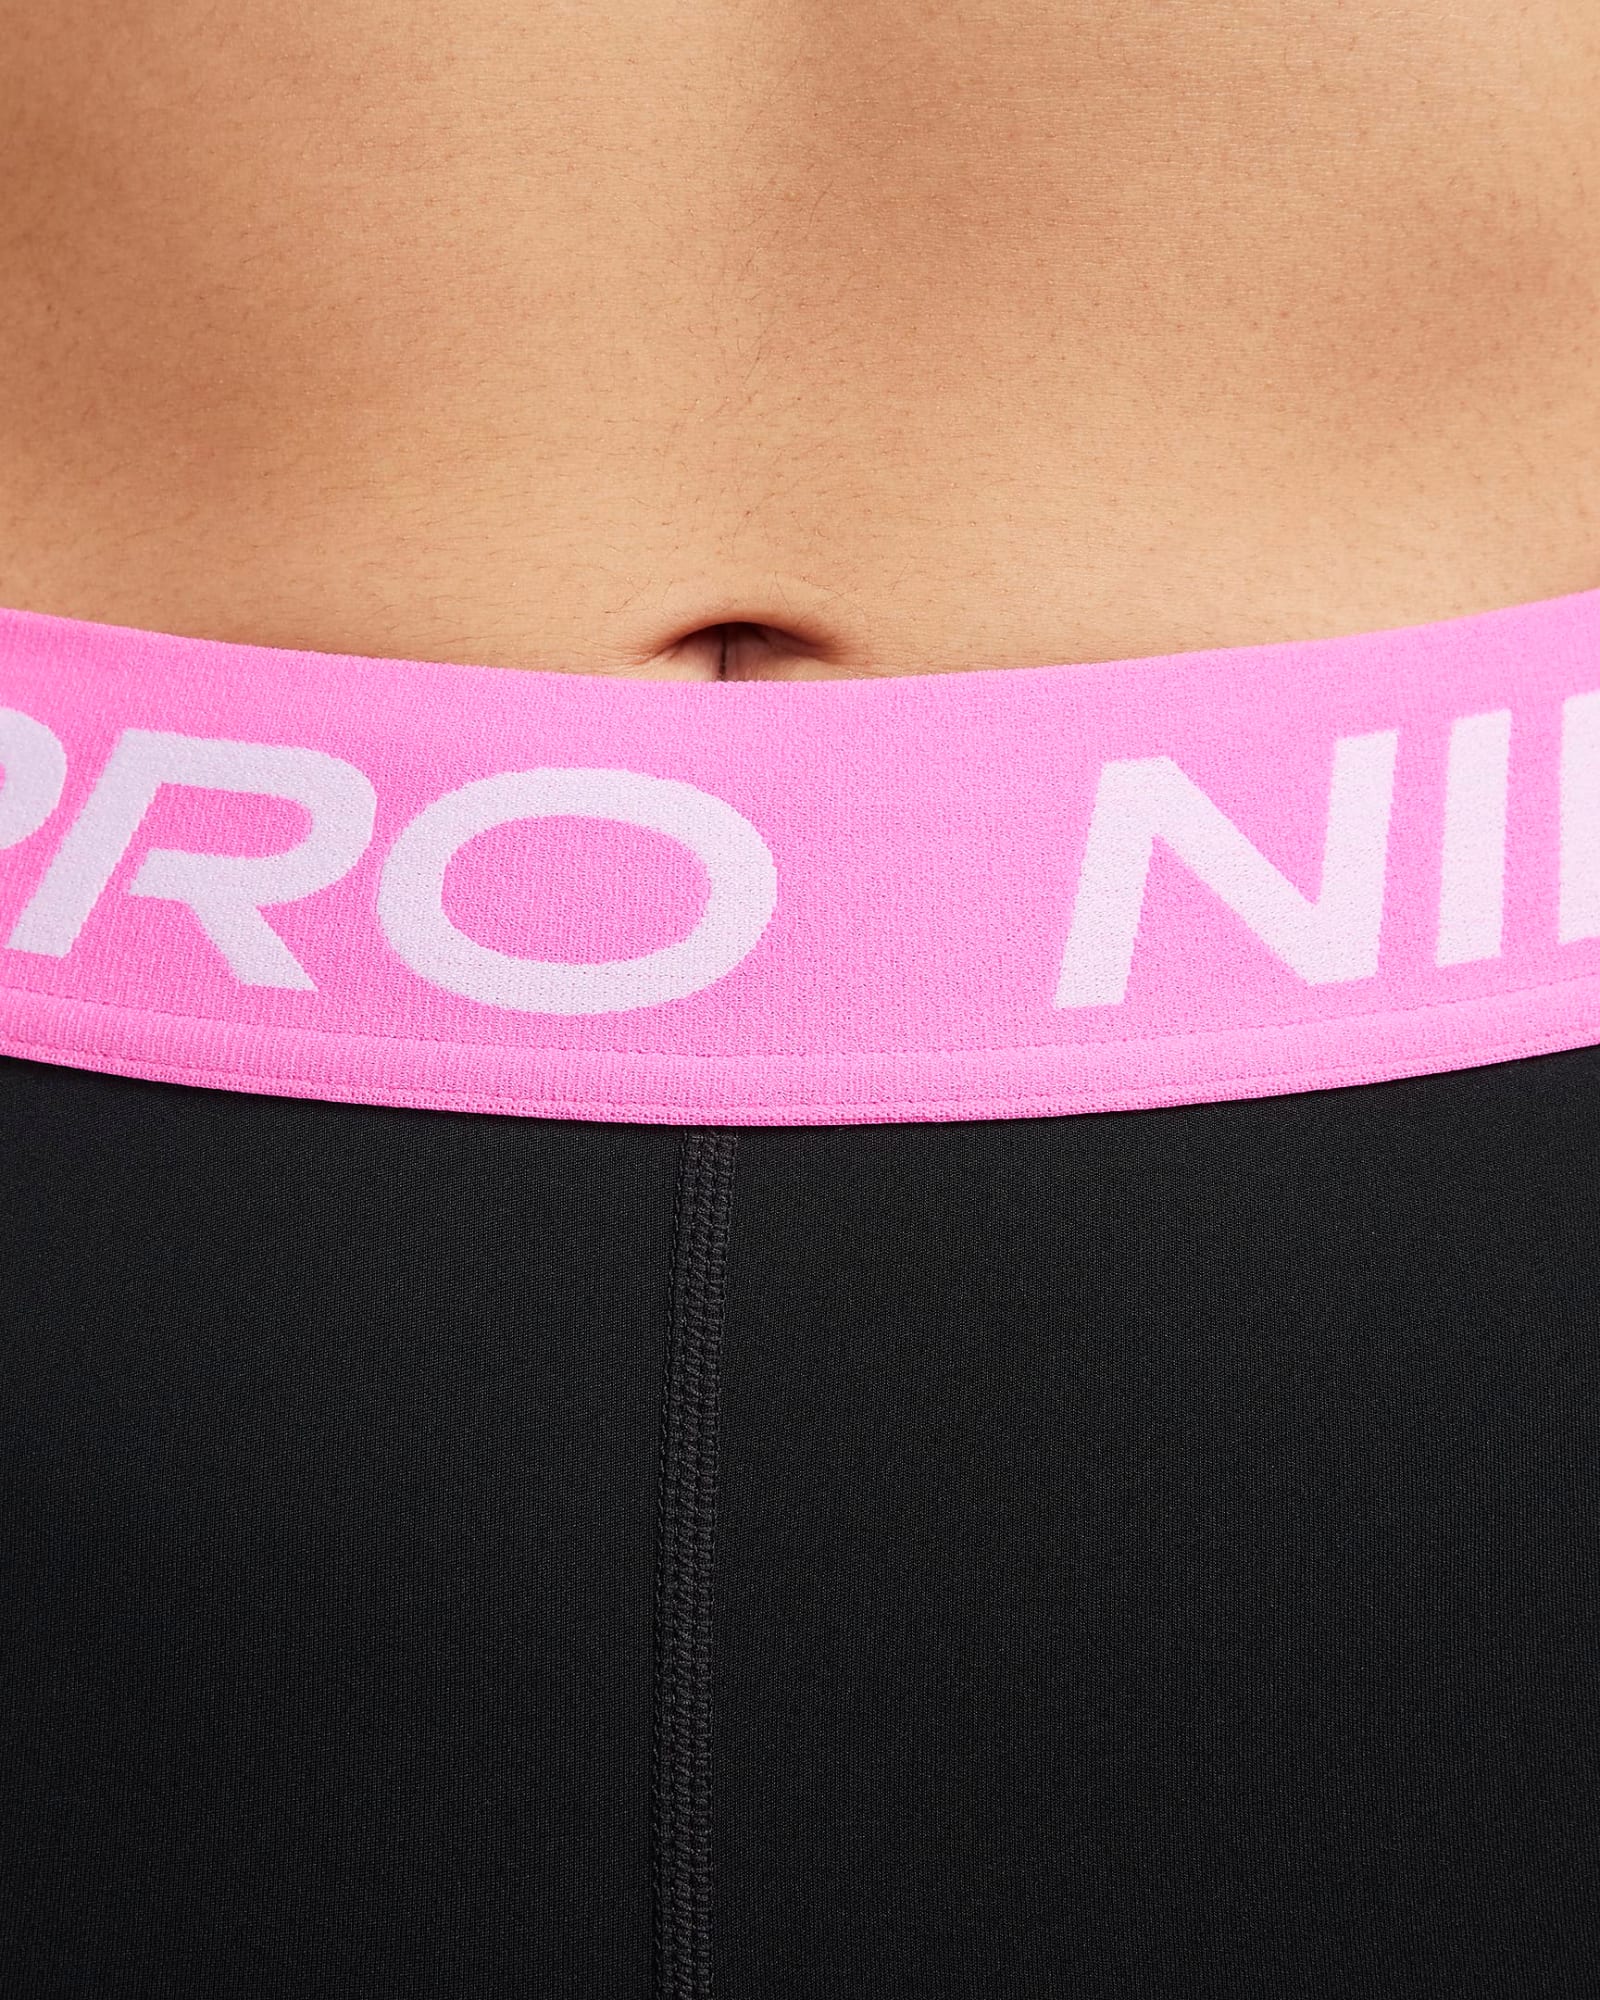 Nike Nike Pro Training 3 Inch Shorts In Pink